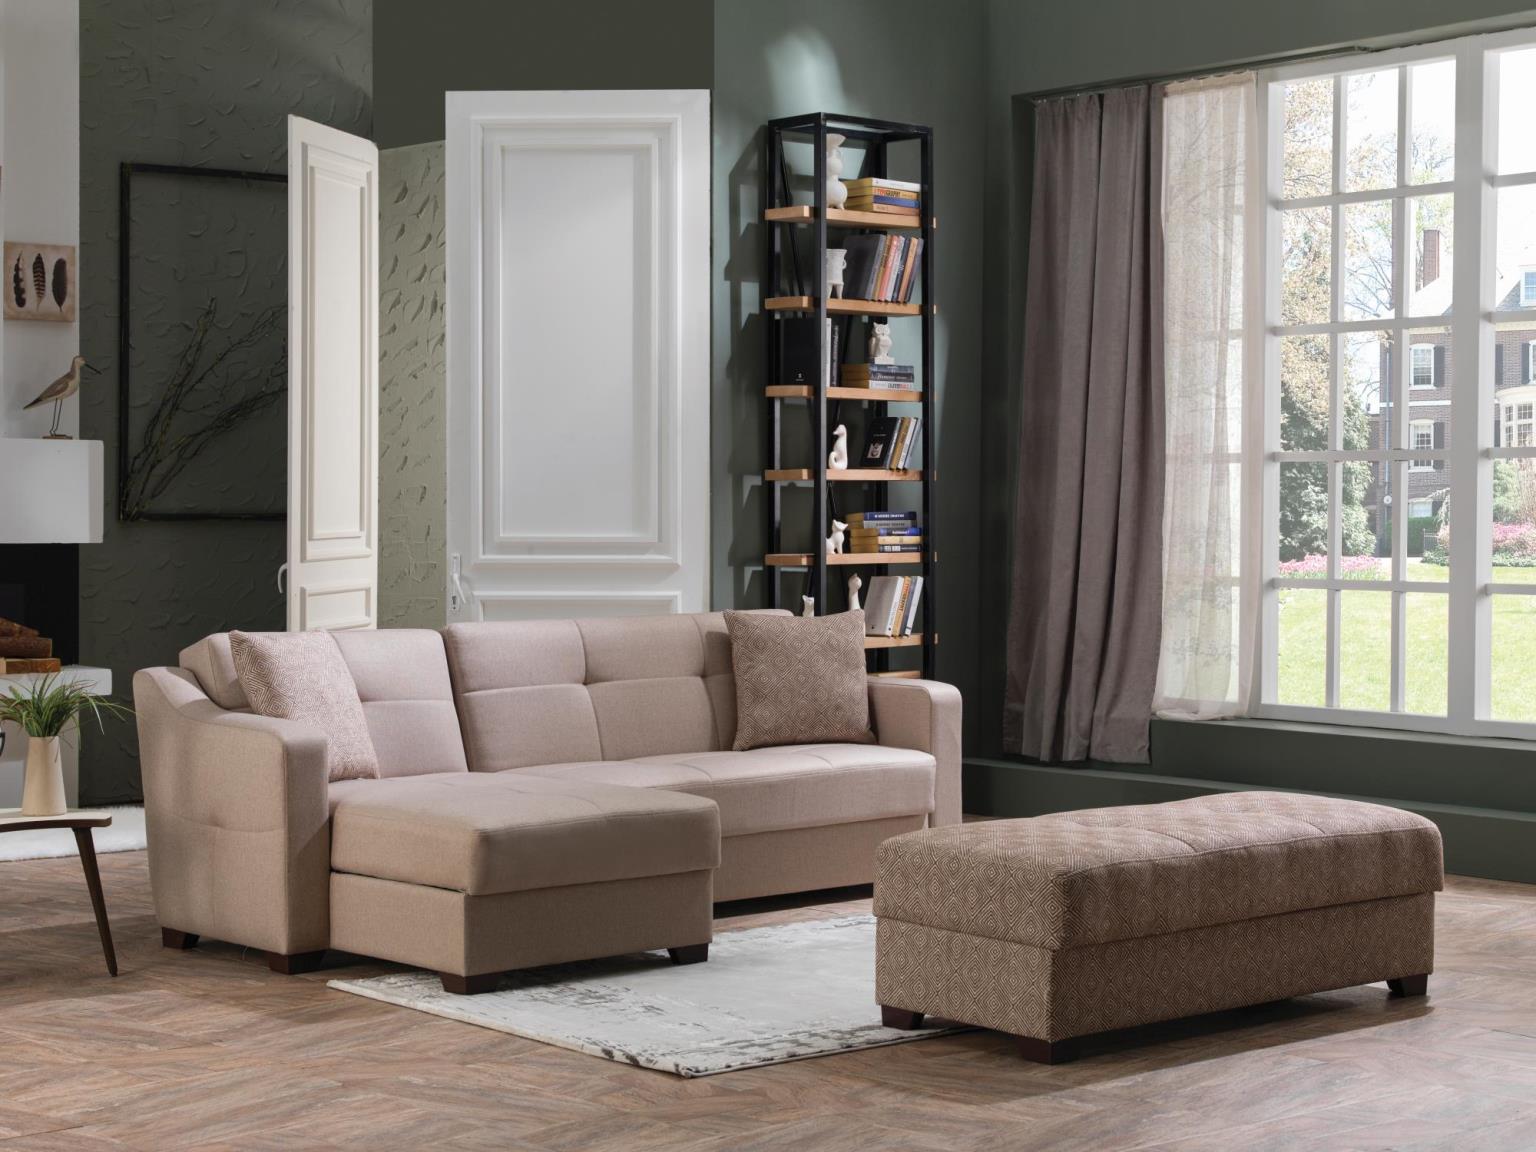 Tahoe Set (Sectional Sofa & Ottoman) - Home Store Furniture